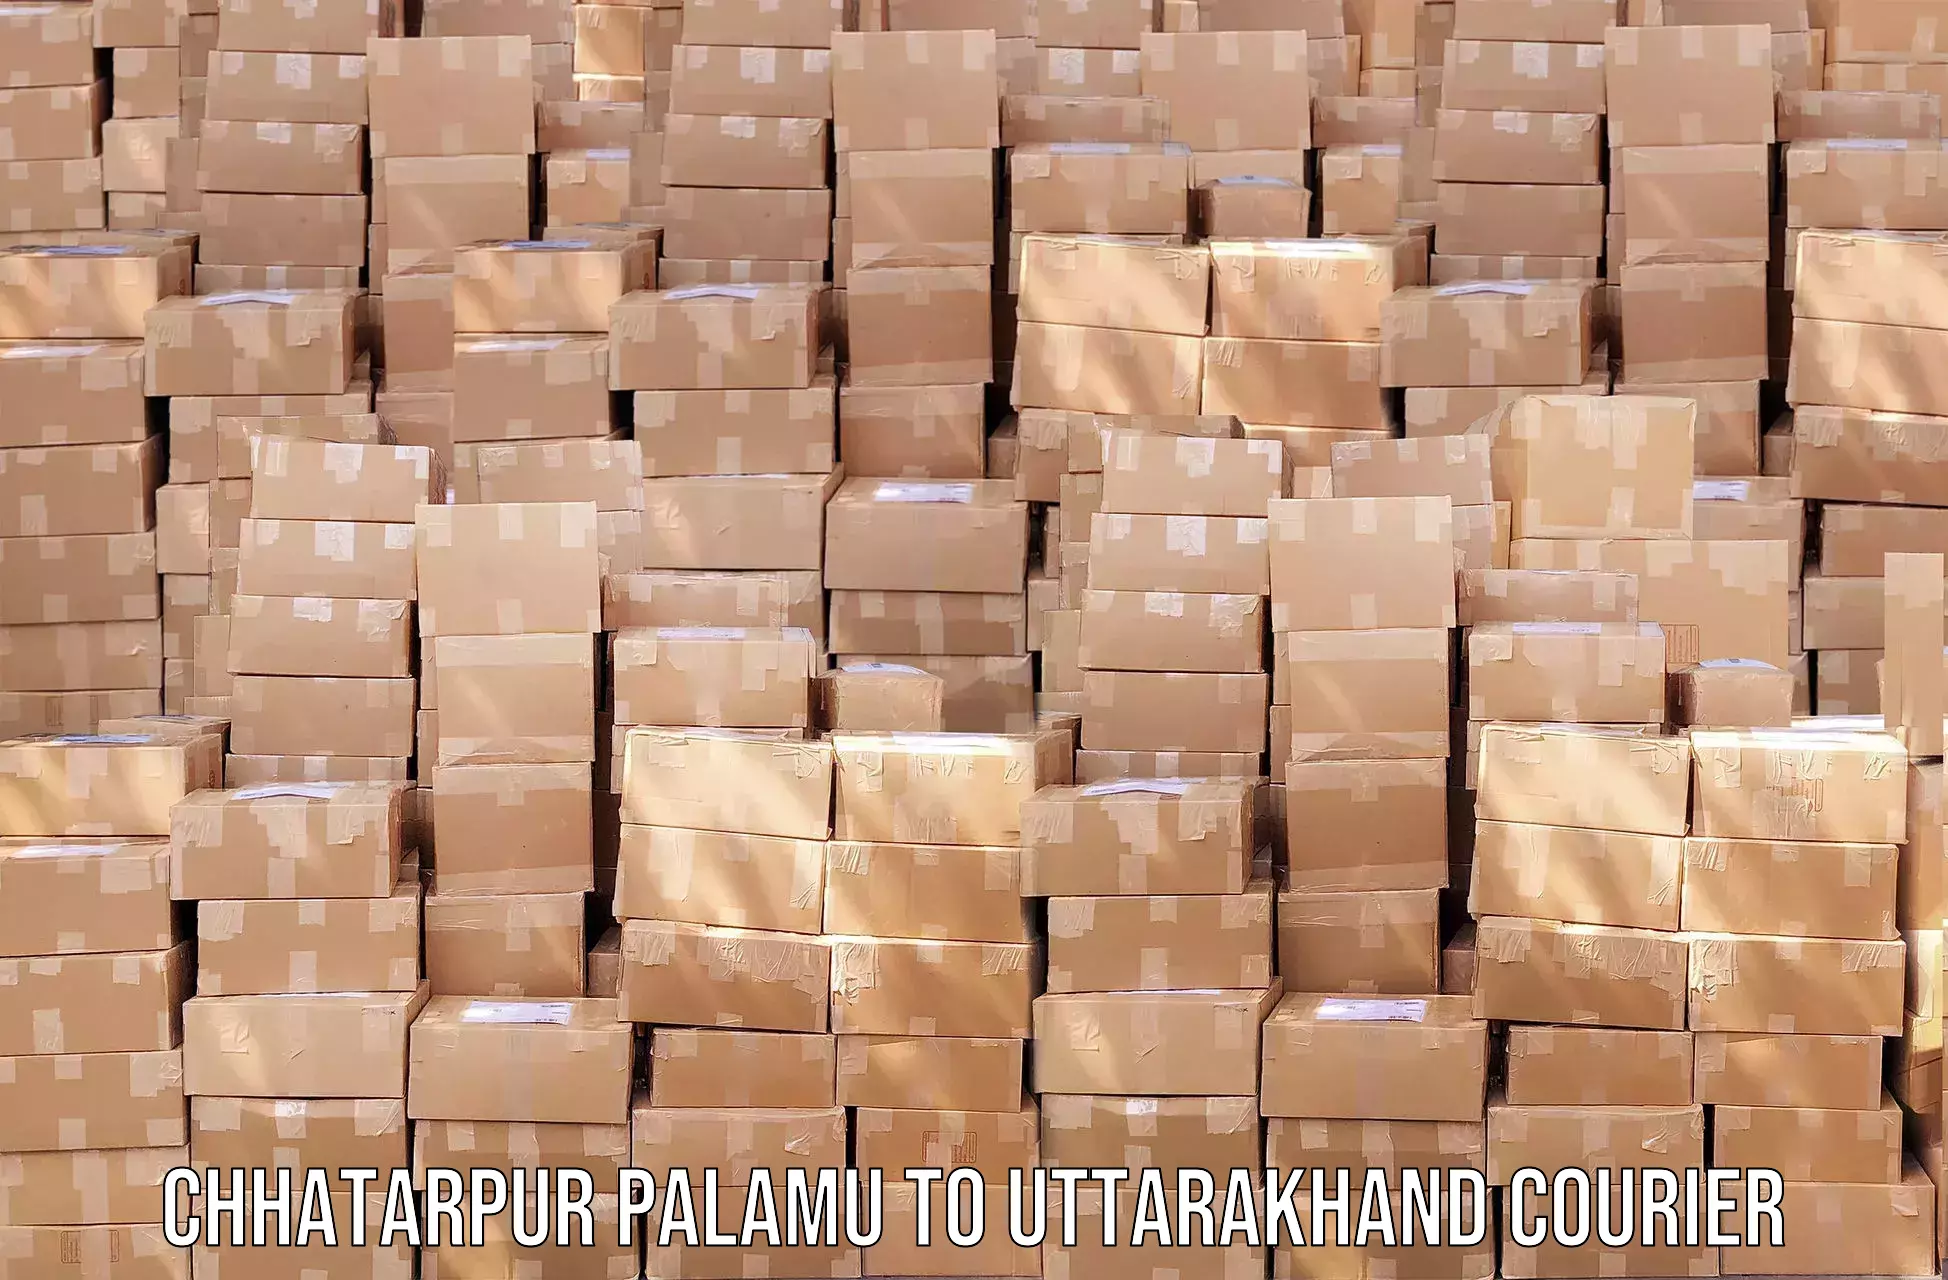 Reliable courier service Chhatarpur Palamu to Chamoli